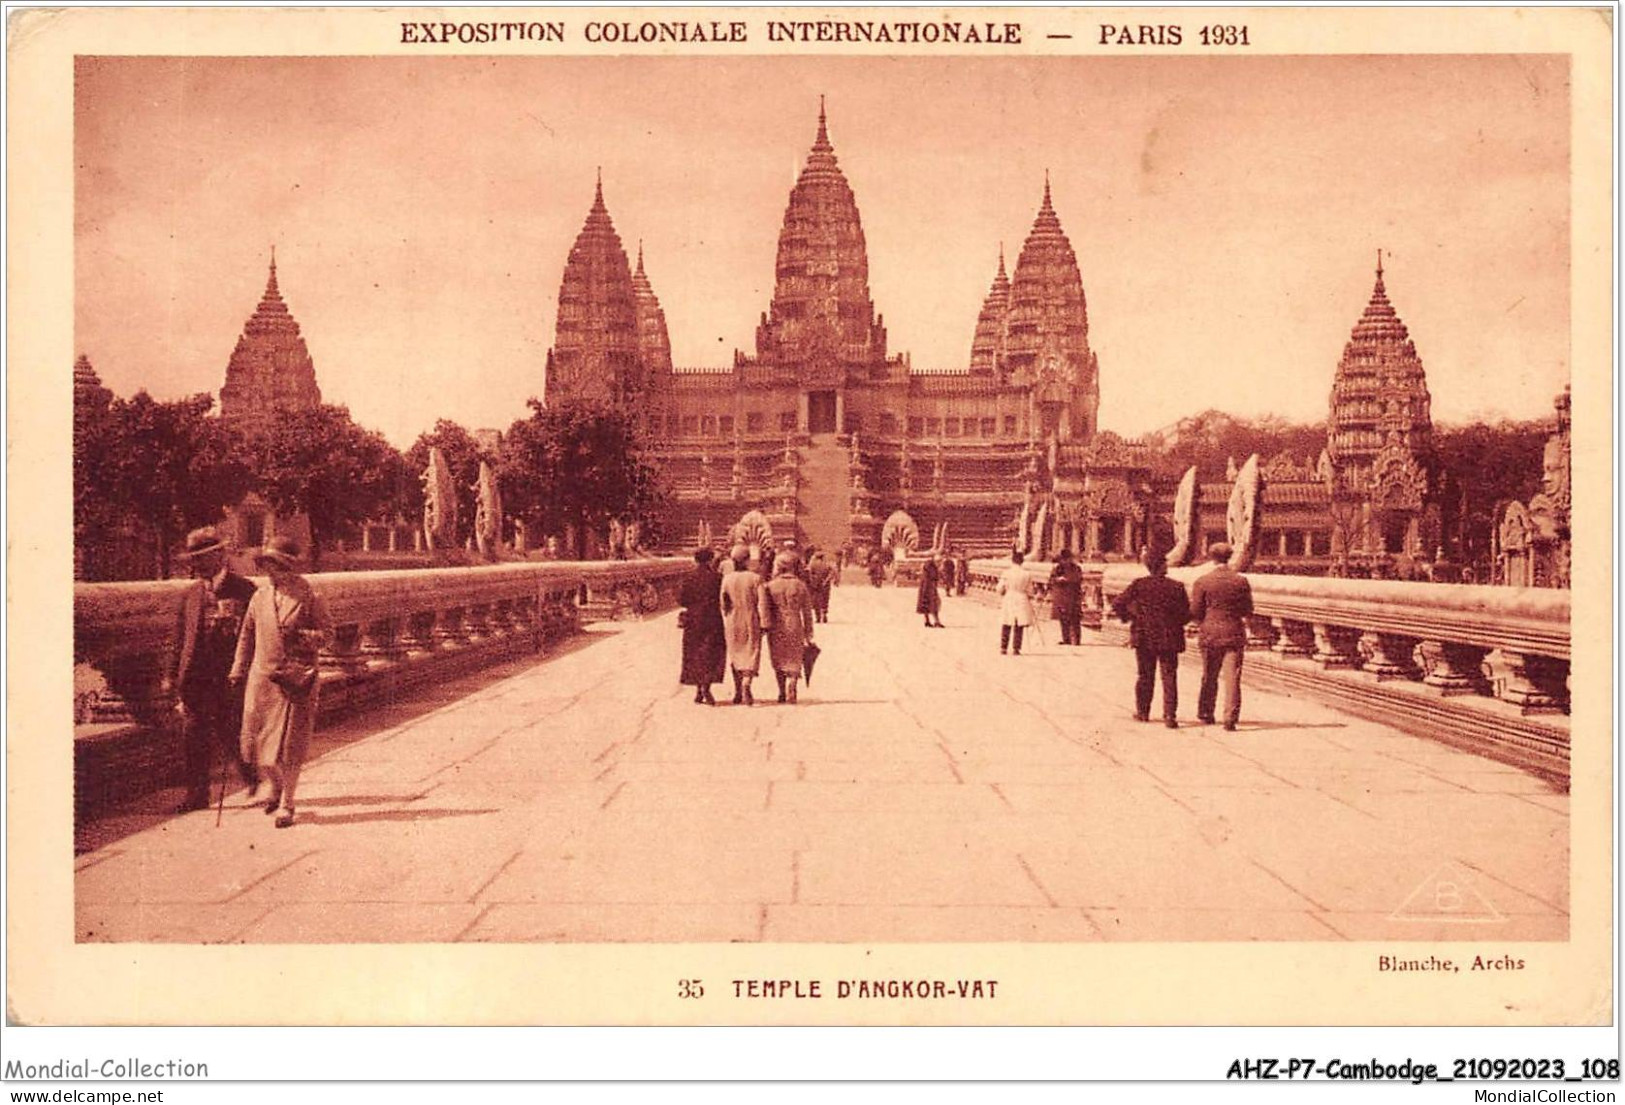 AHZP7-CAMBODGE-0650 - EXPOSITION COLONIALE INTERNATIONALE - PARIS 1931 - TEMPLE D'ANGKOR-VAT - Cambodia